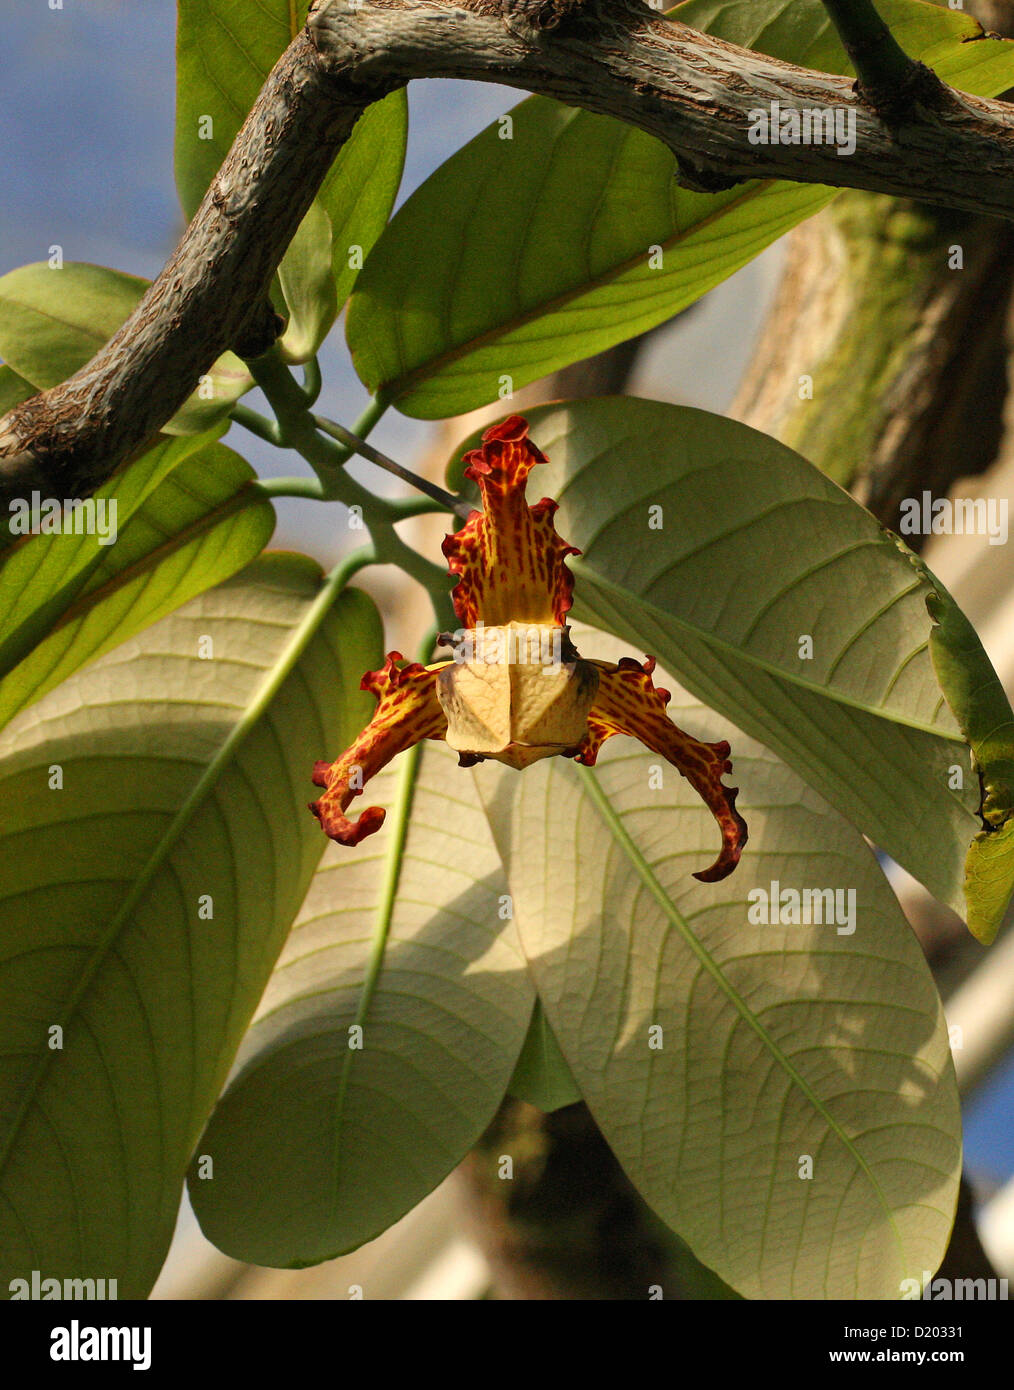 Flower of the African Orchid Nutmeg Tree, Monodora myristica, Annonaceae, aka Jamaica Nutmeg or Calabash Nutmeg. Africa. Stock Photo